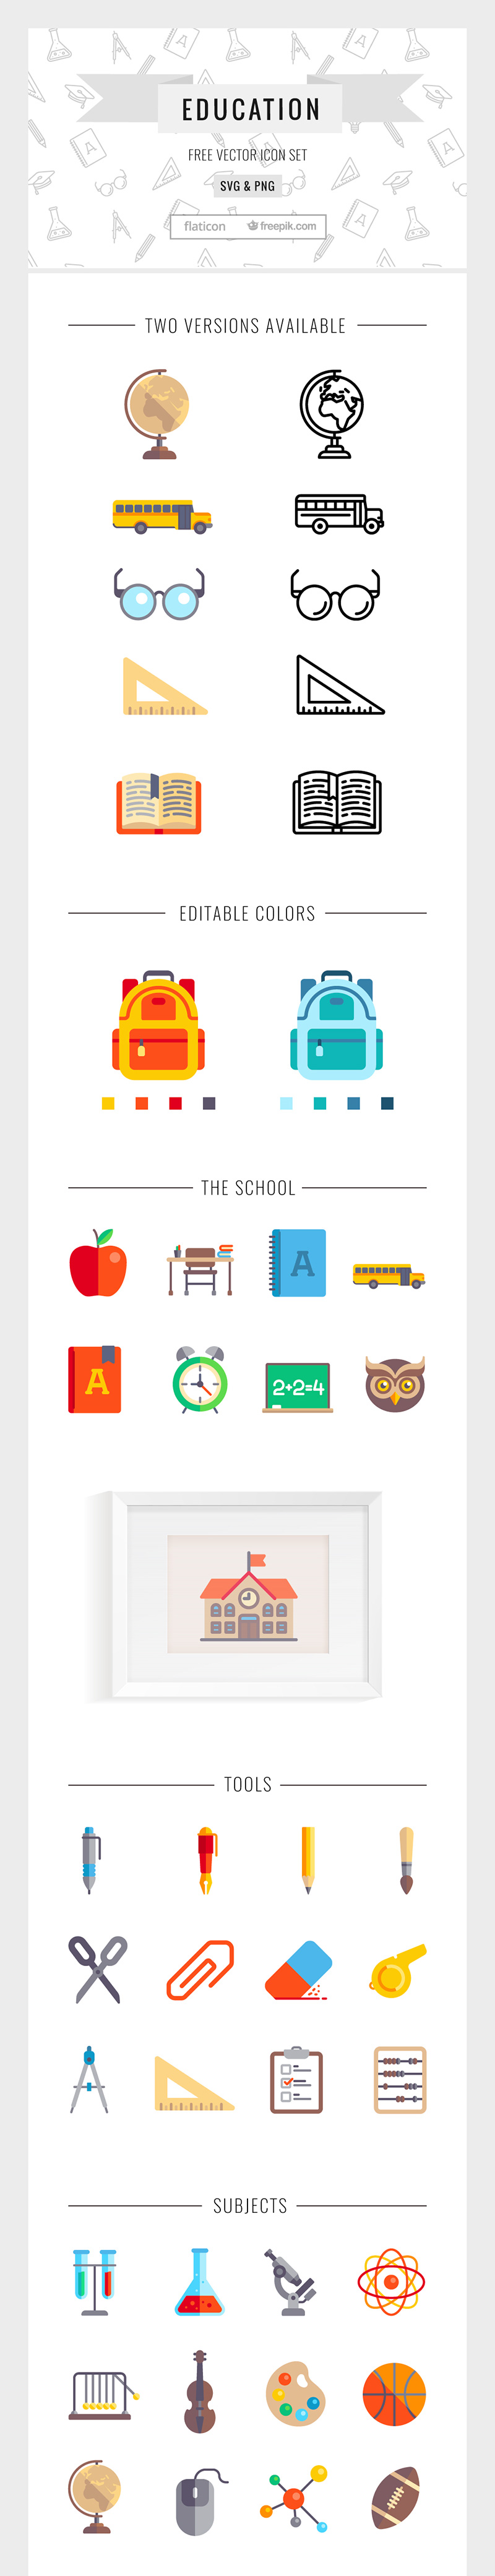 Education-Icons1